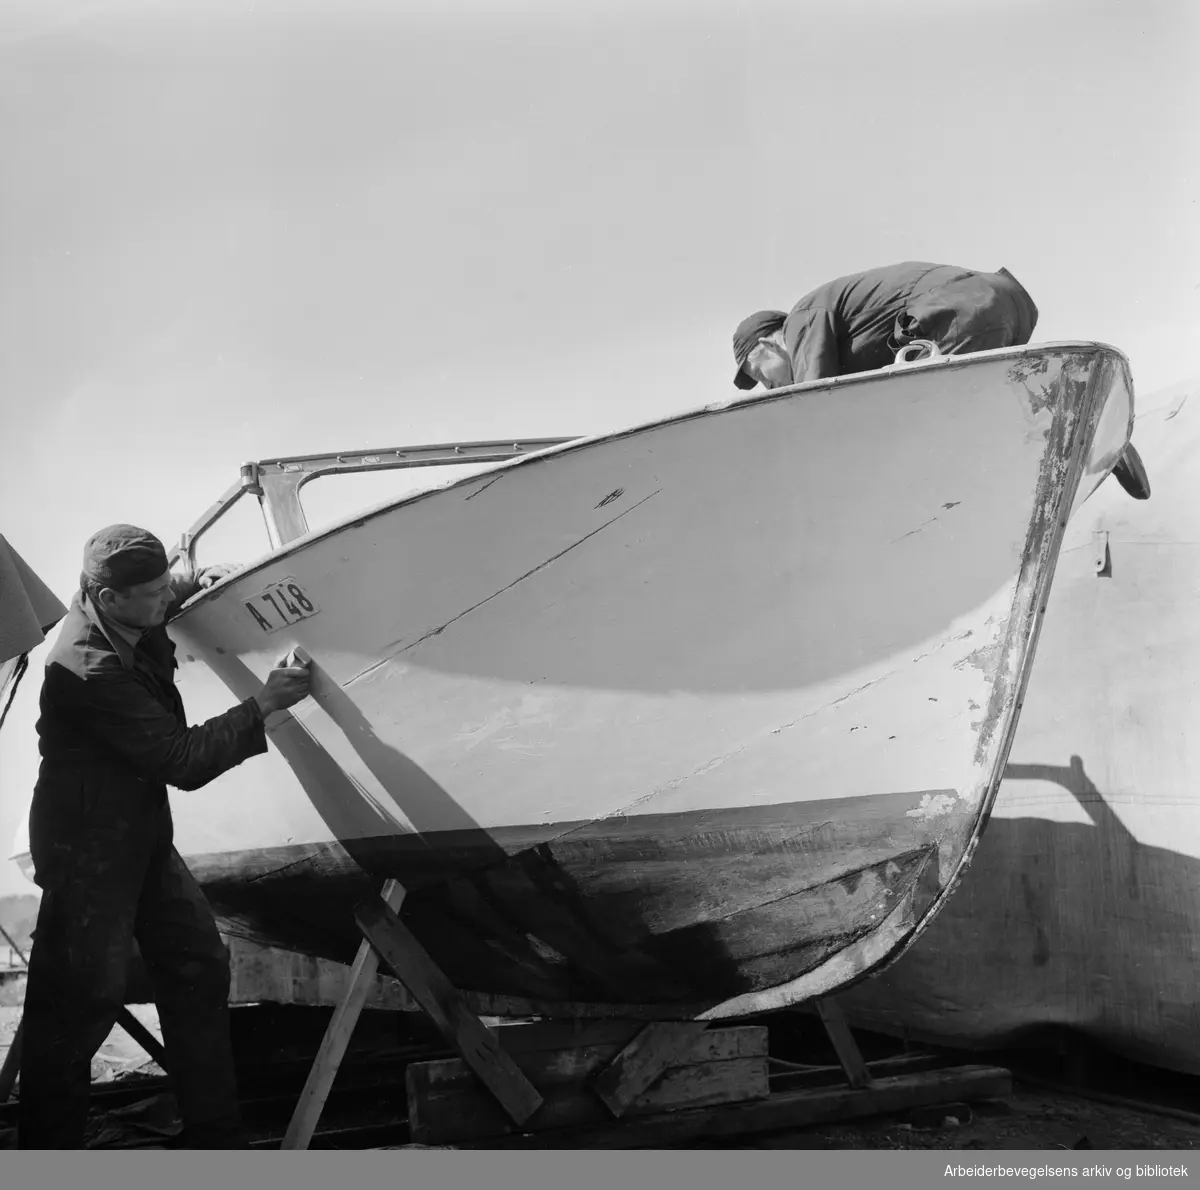 Trebåter i vinteropplag. Bjarne Jacobsen og Birger Holmsen pusser motorbåt. Karenslyst - Sjølyst. Mai 1960.